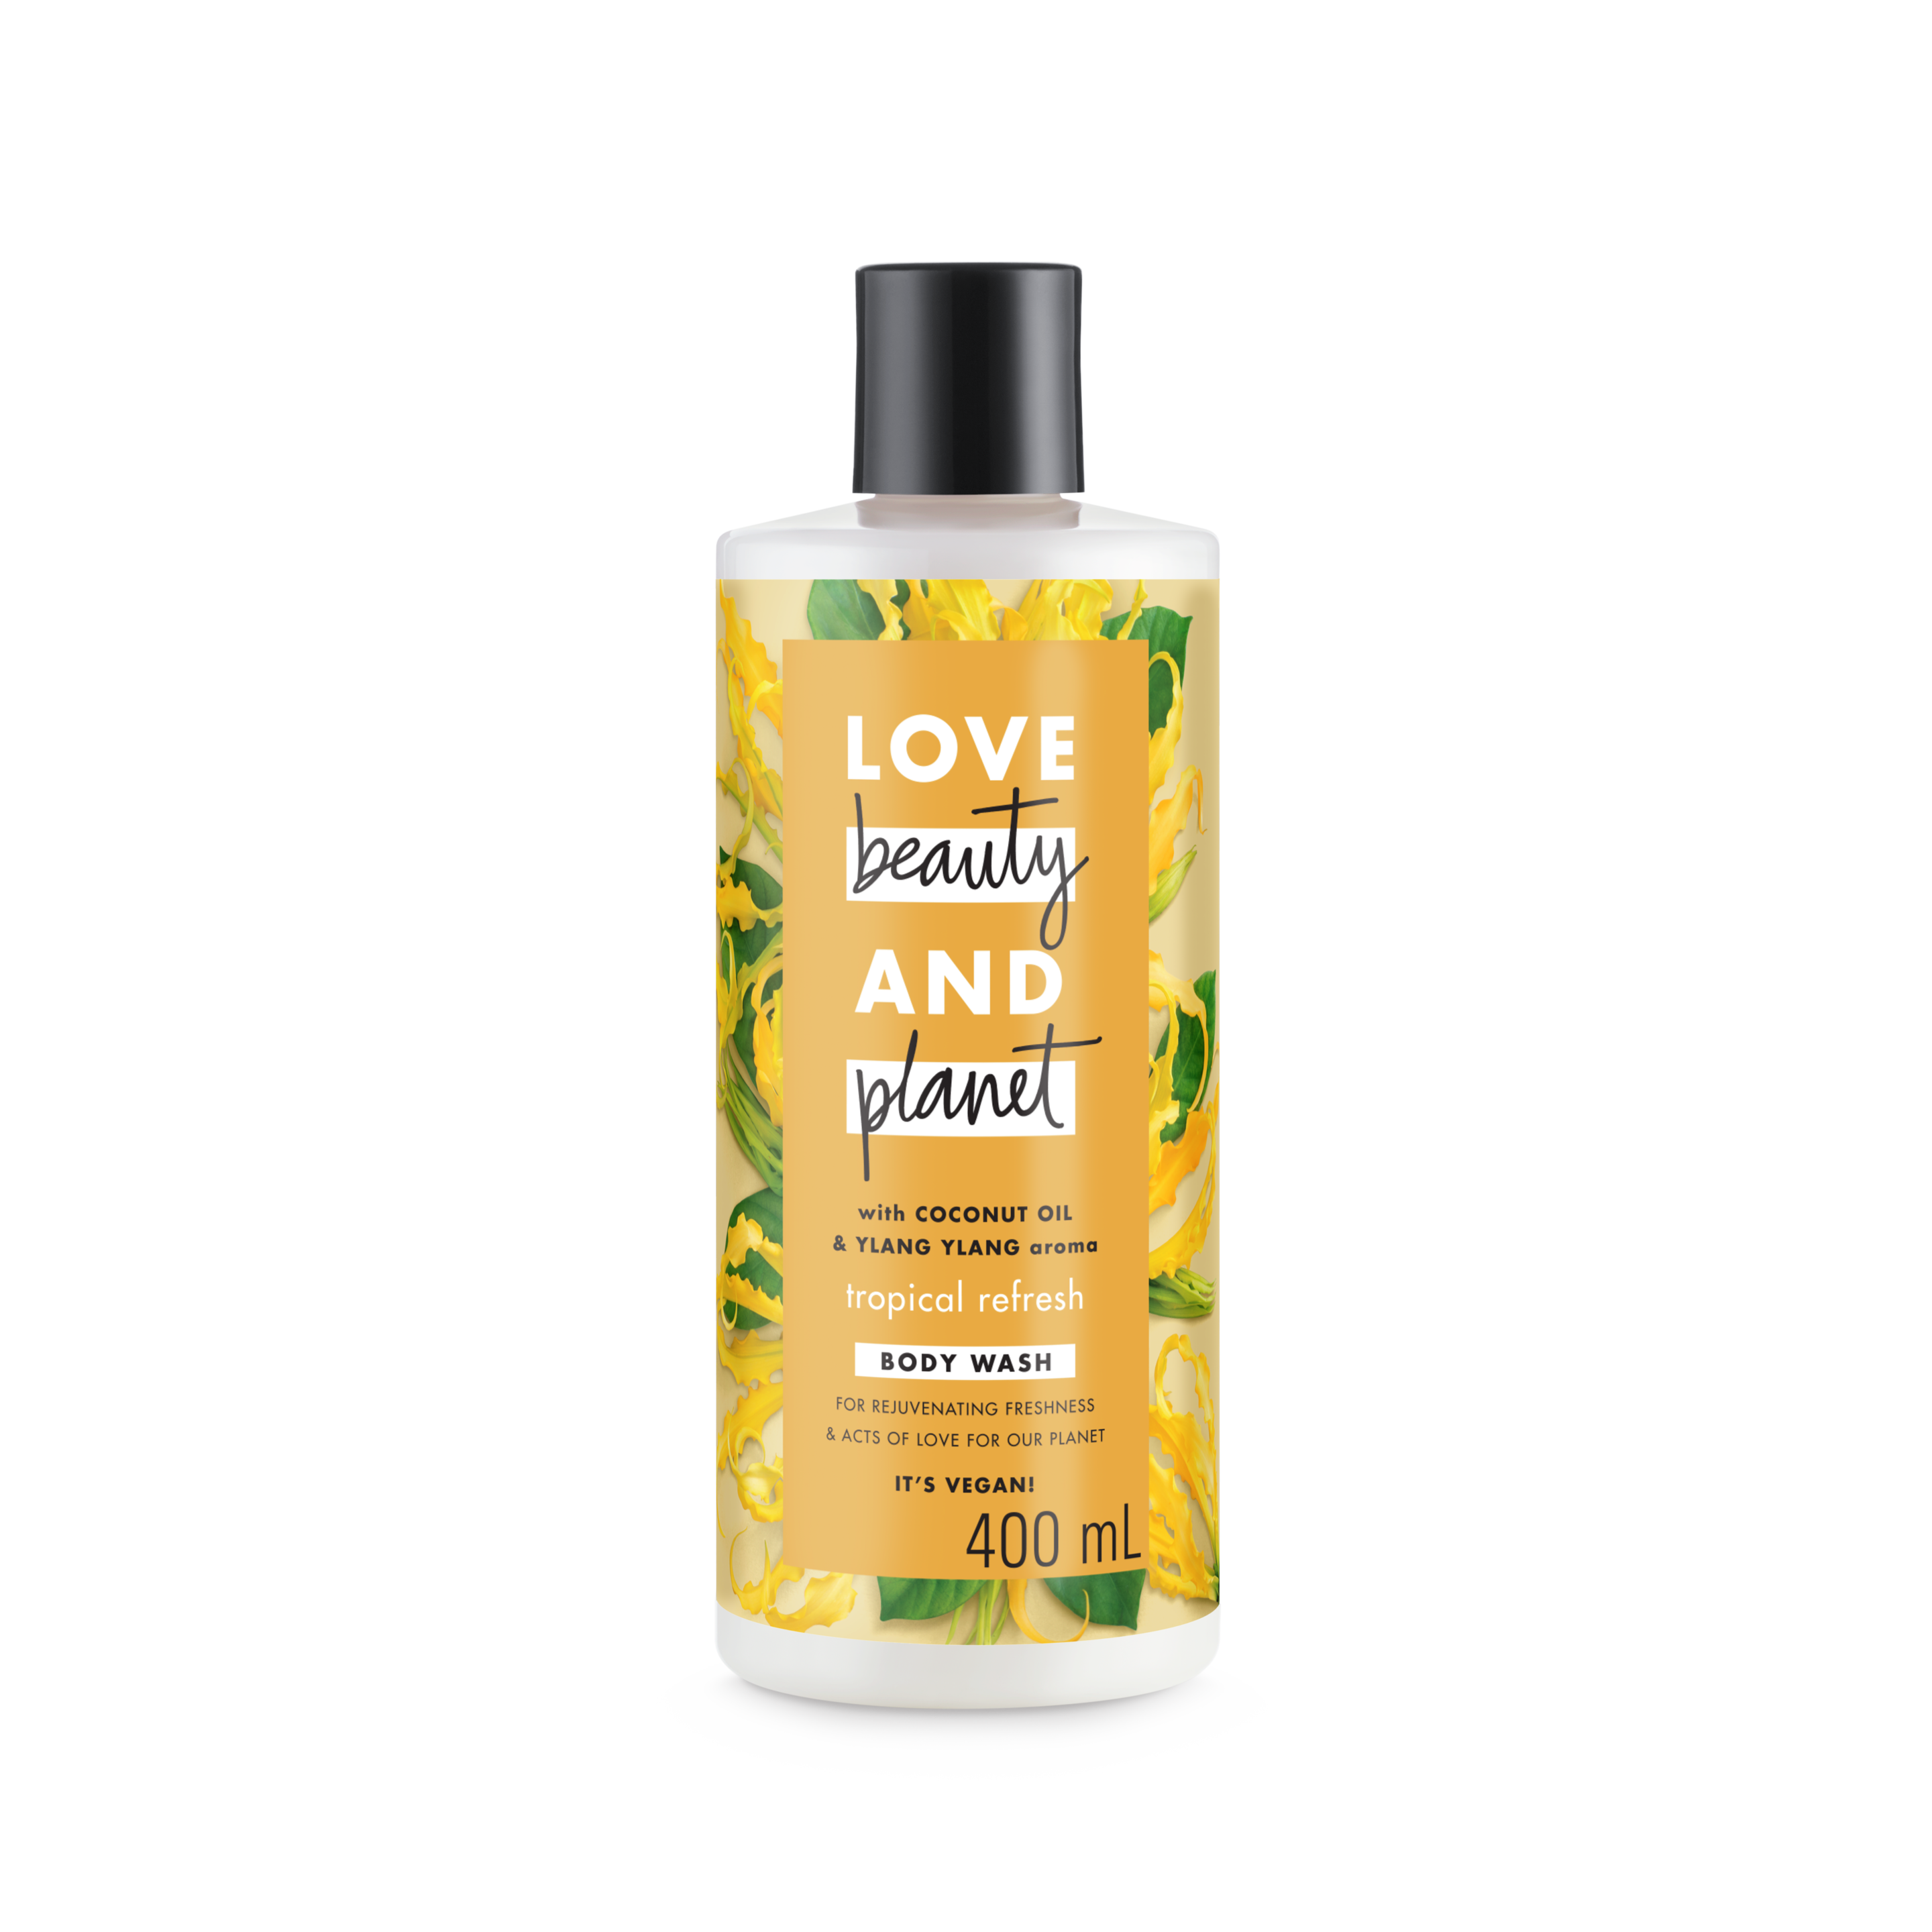 Bagian belakang kemasan Love Beauty and Planet Coconut Oil & Ylang Ylang Body Washukuran 400 ml